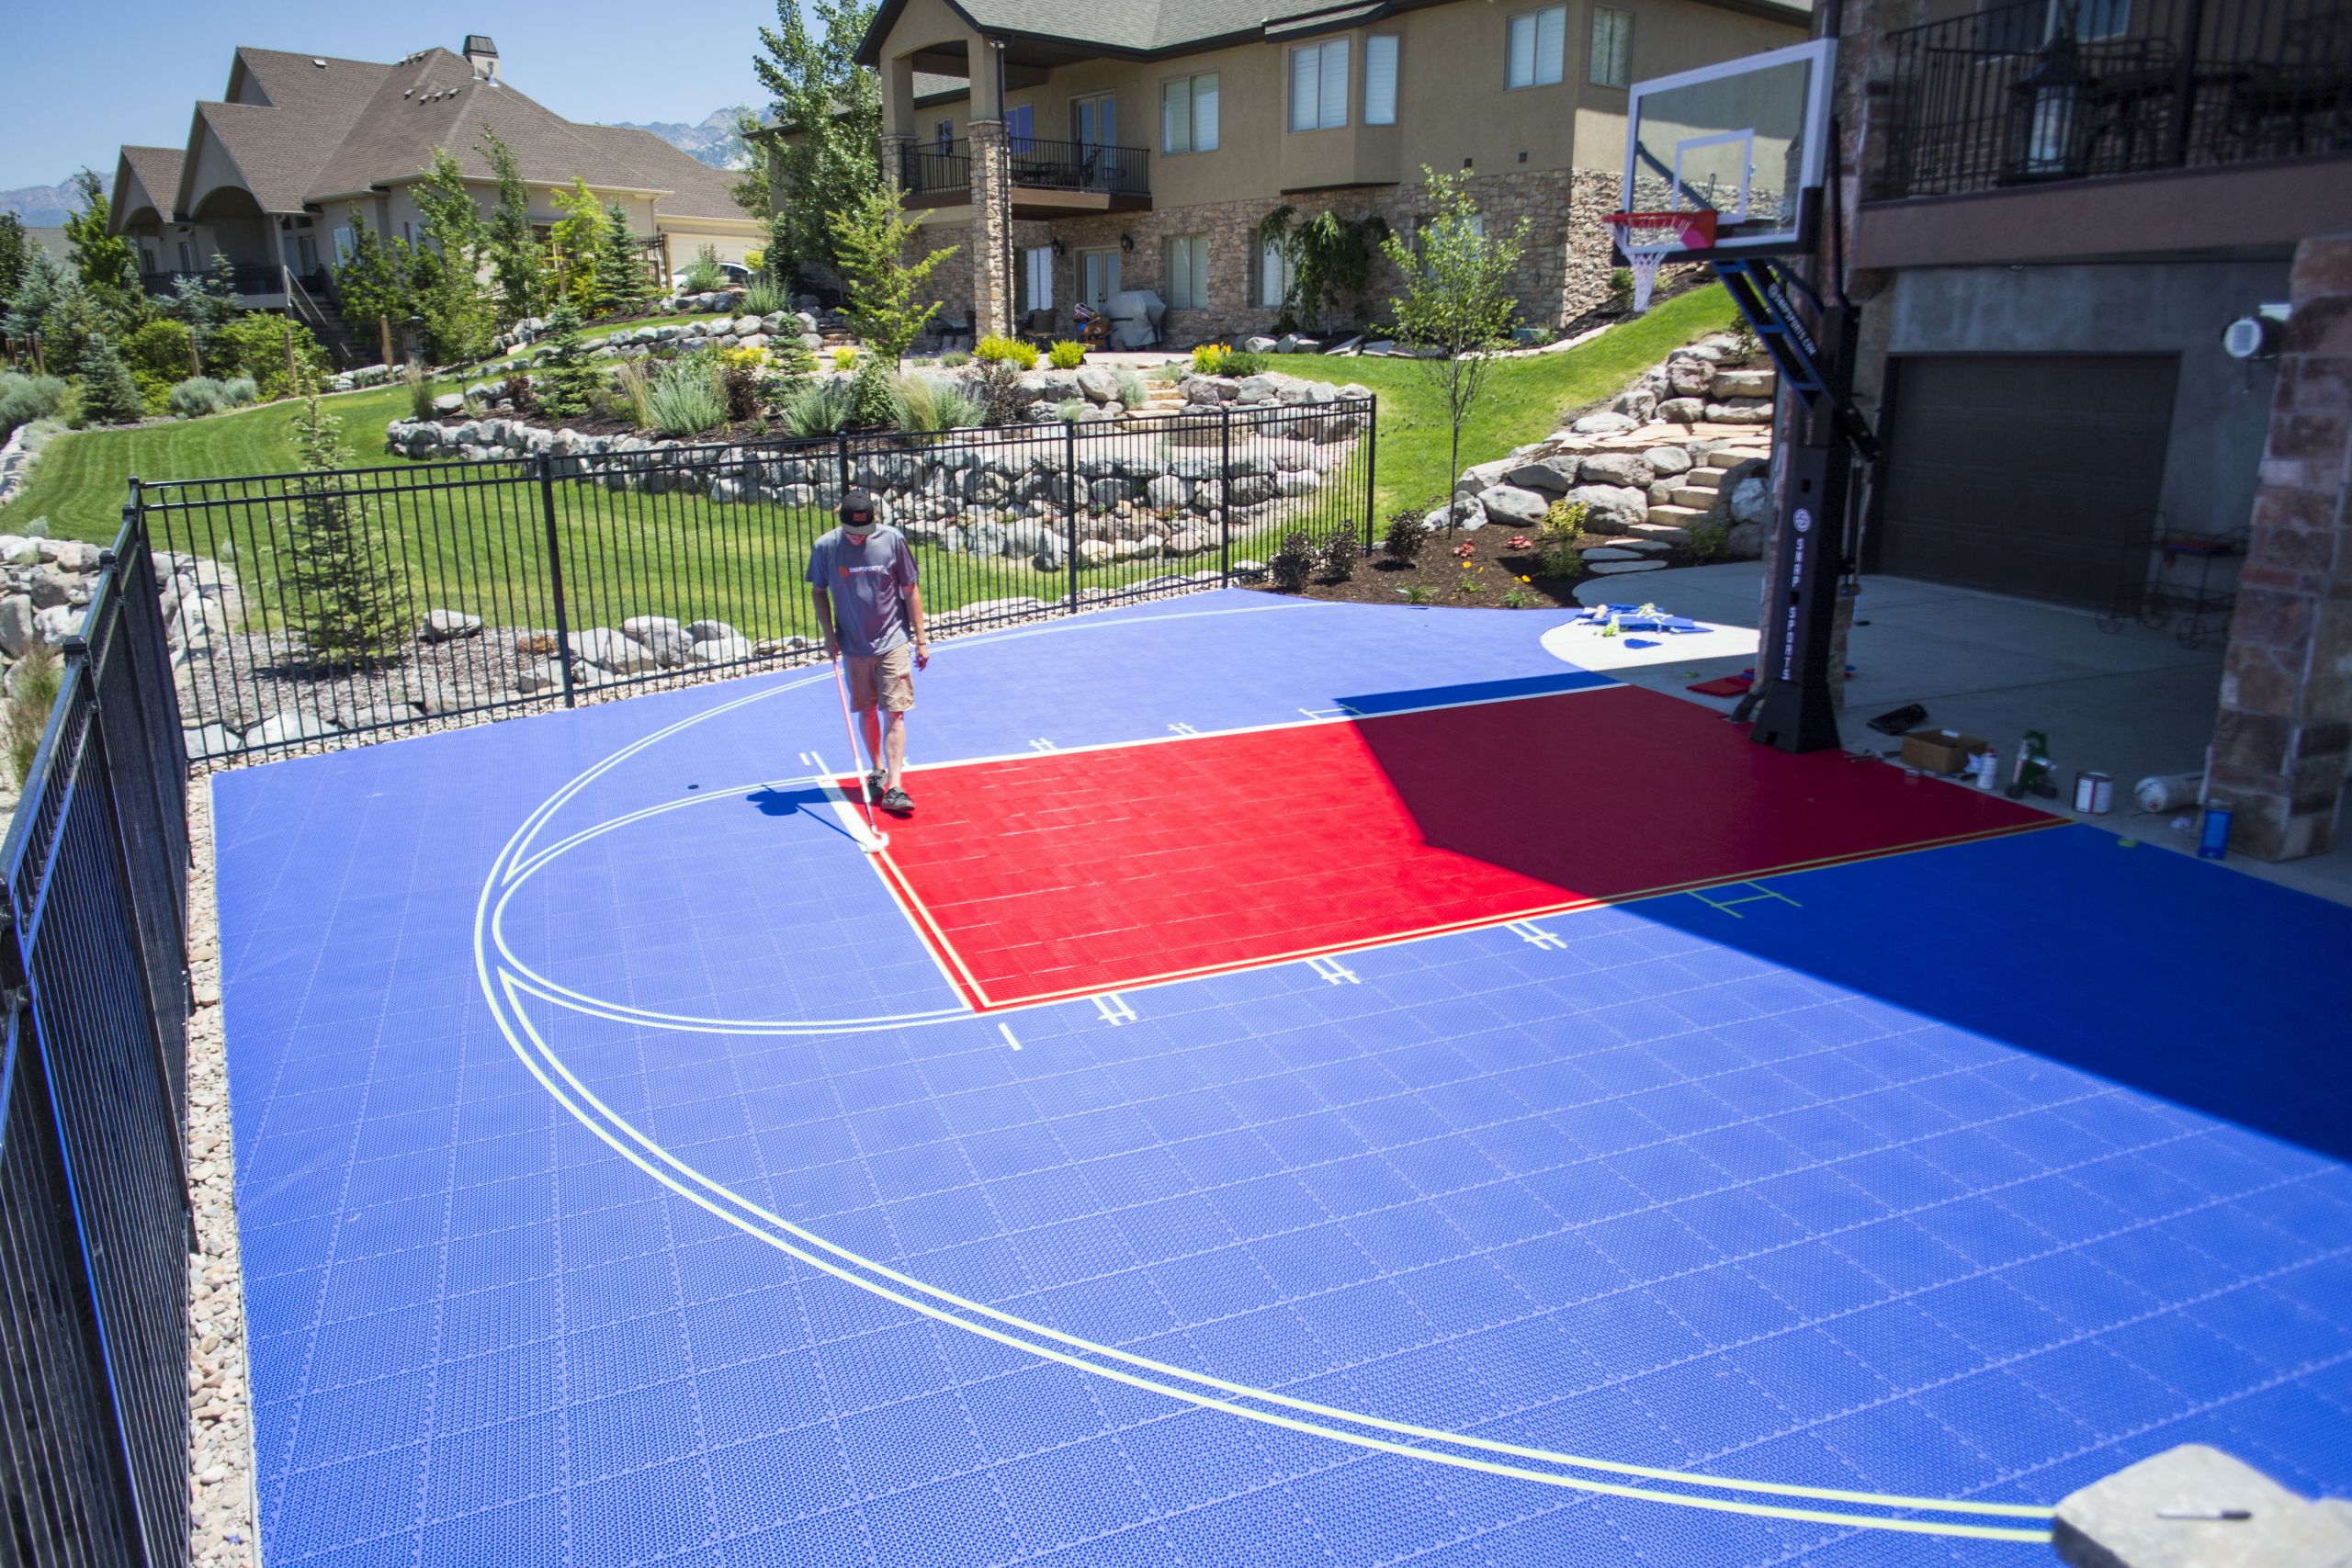 Basketball Court In Backyard
 SnapSports backyard basketball court